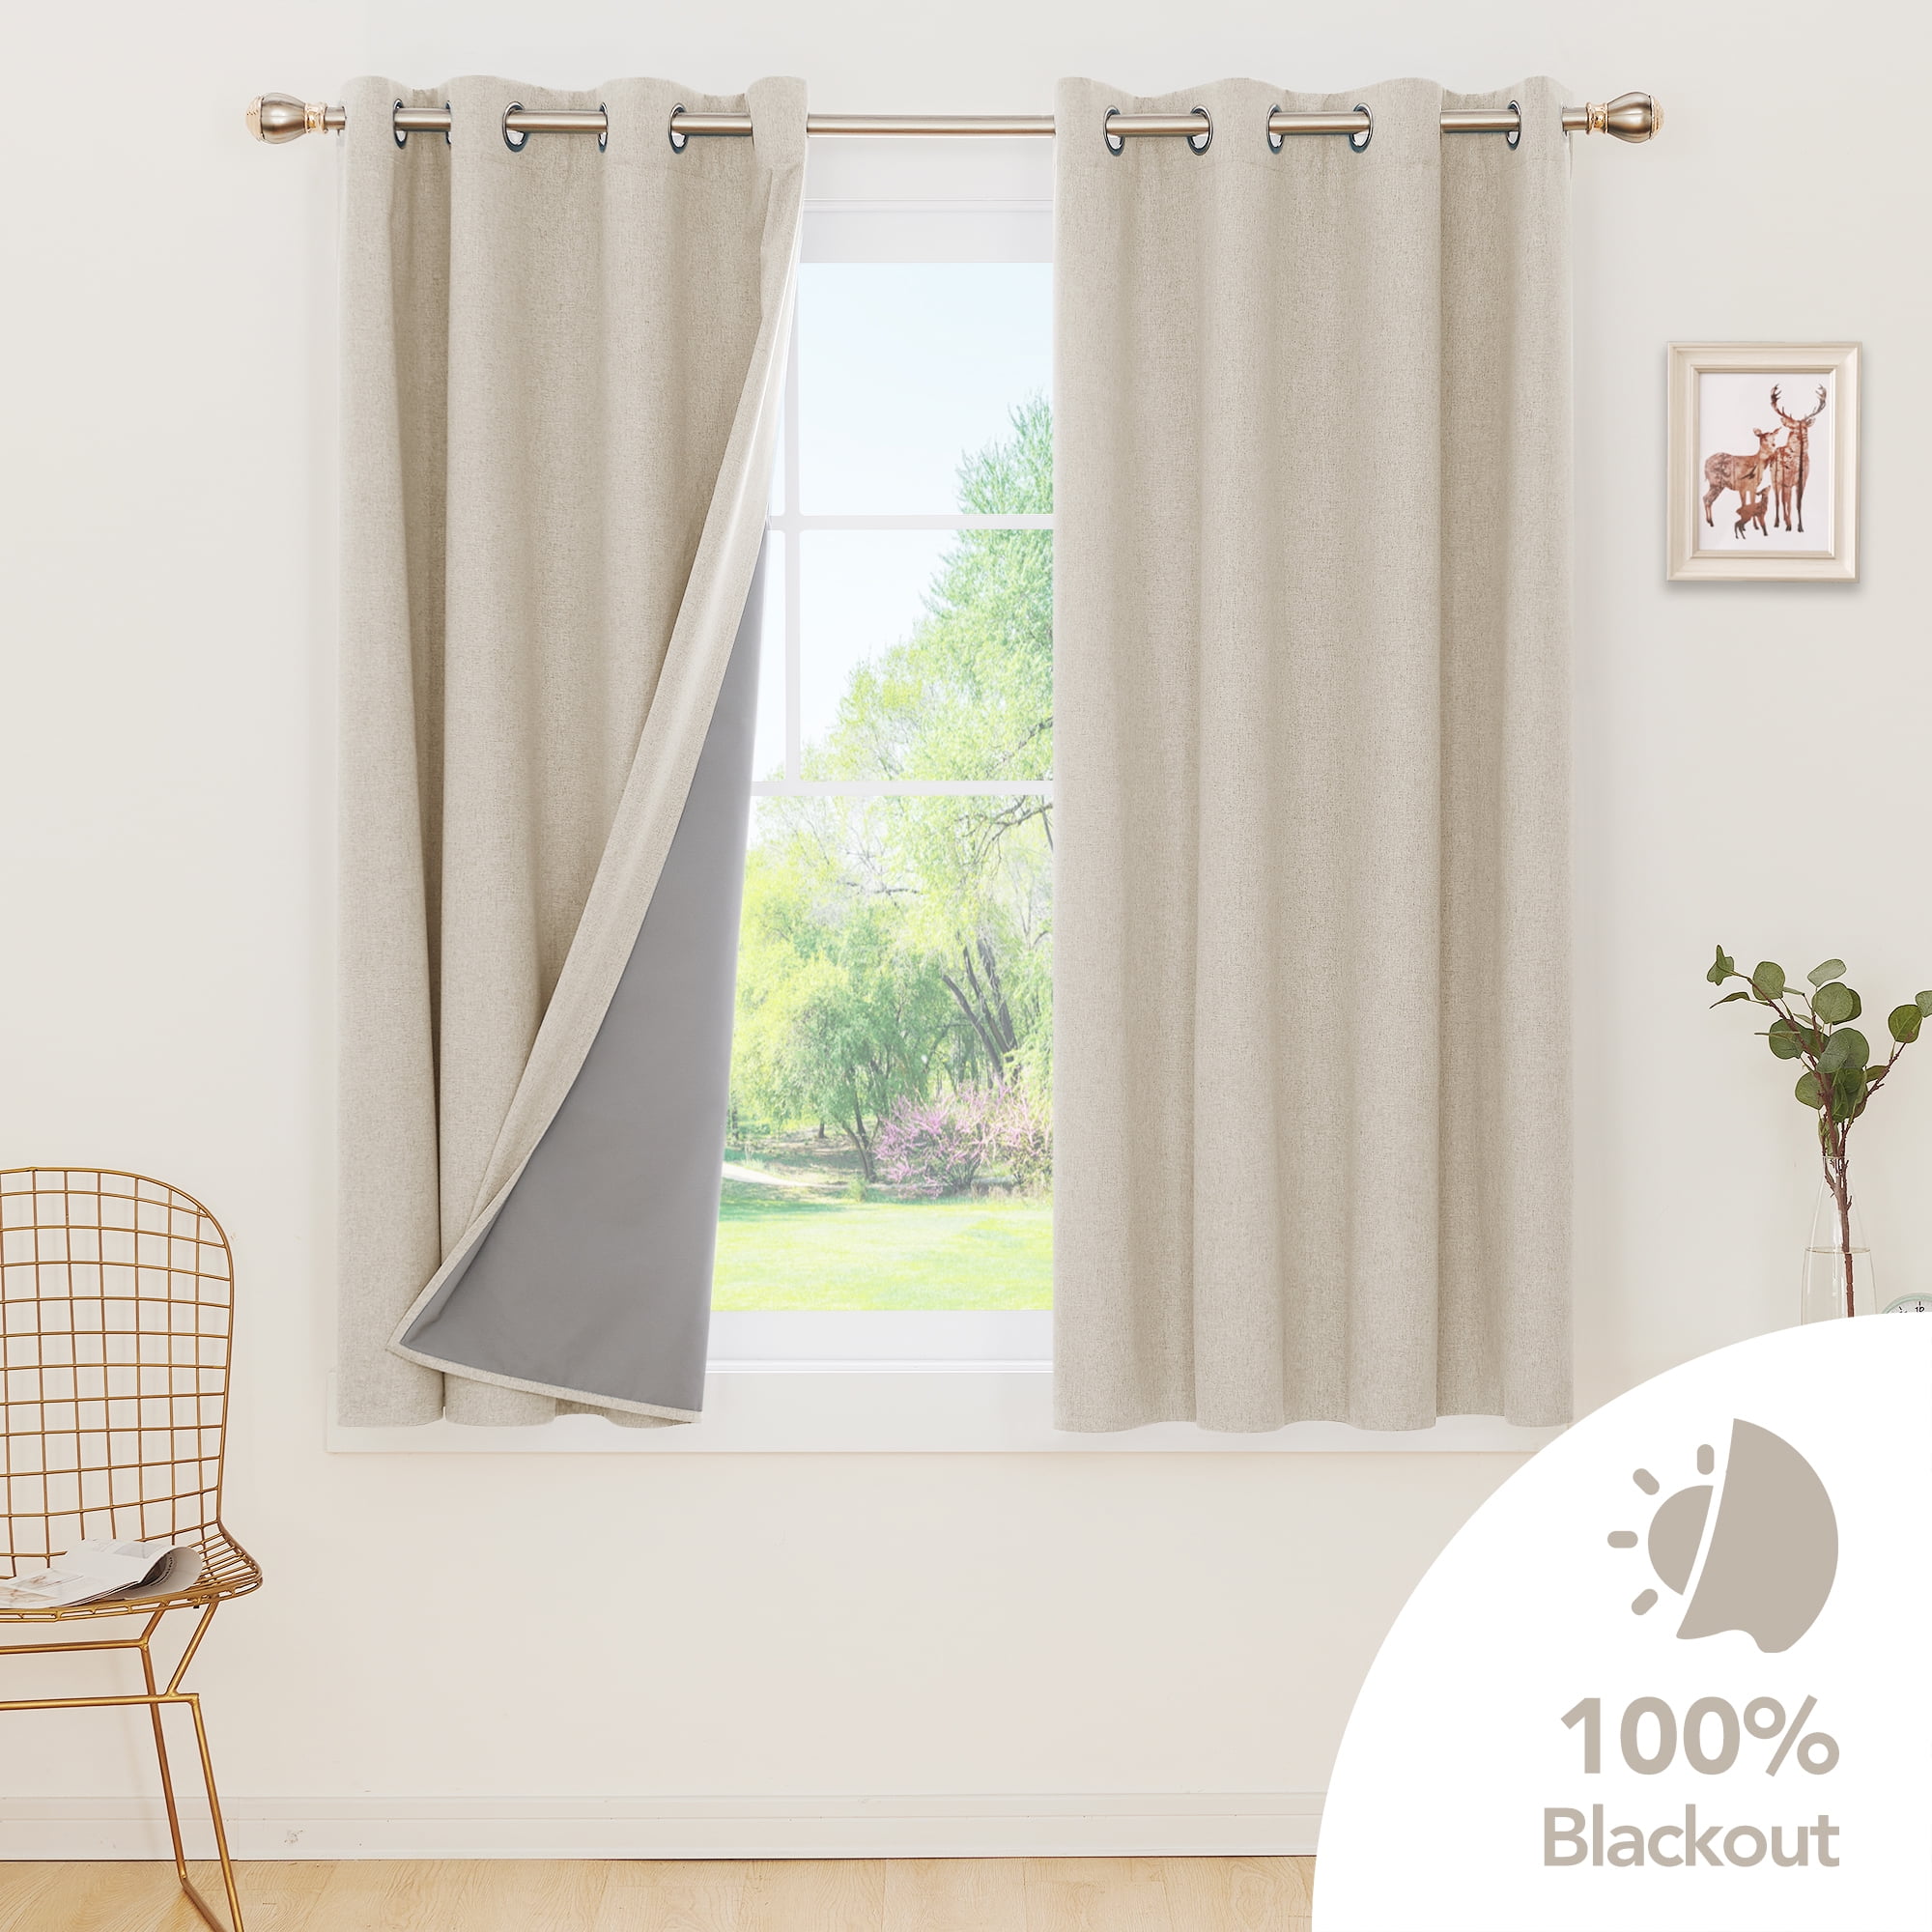 Details about   Cotton Linen Curtain for Living Room Kitchen Window Curtains Treatment Drapes 